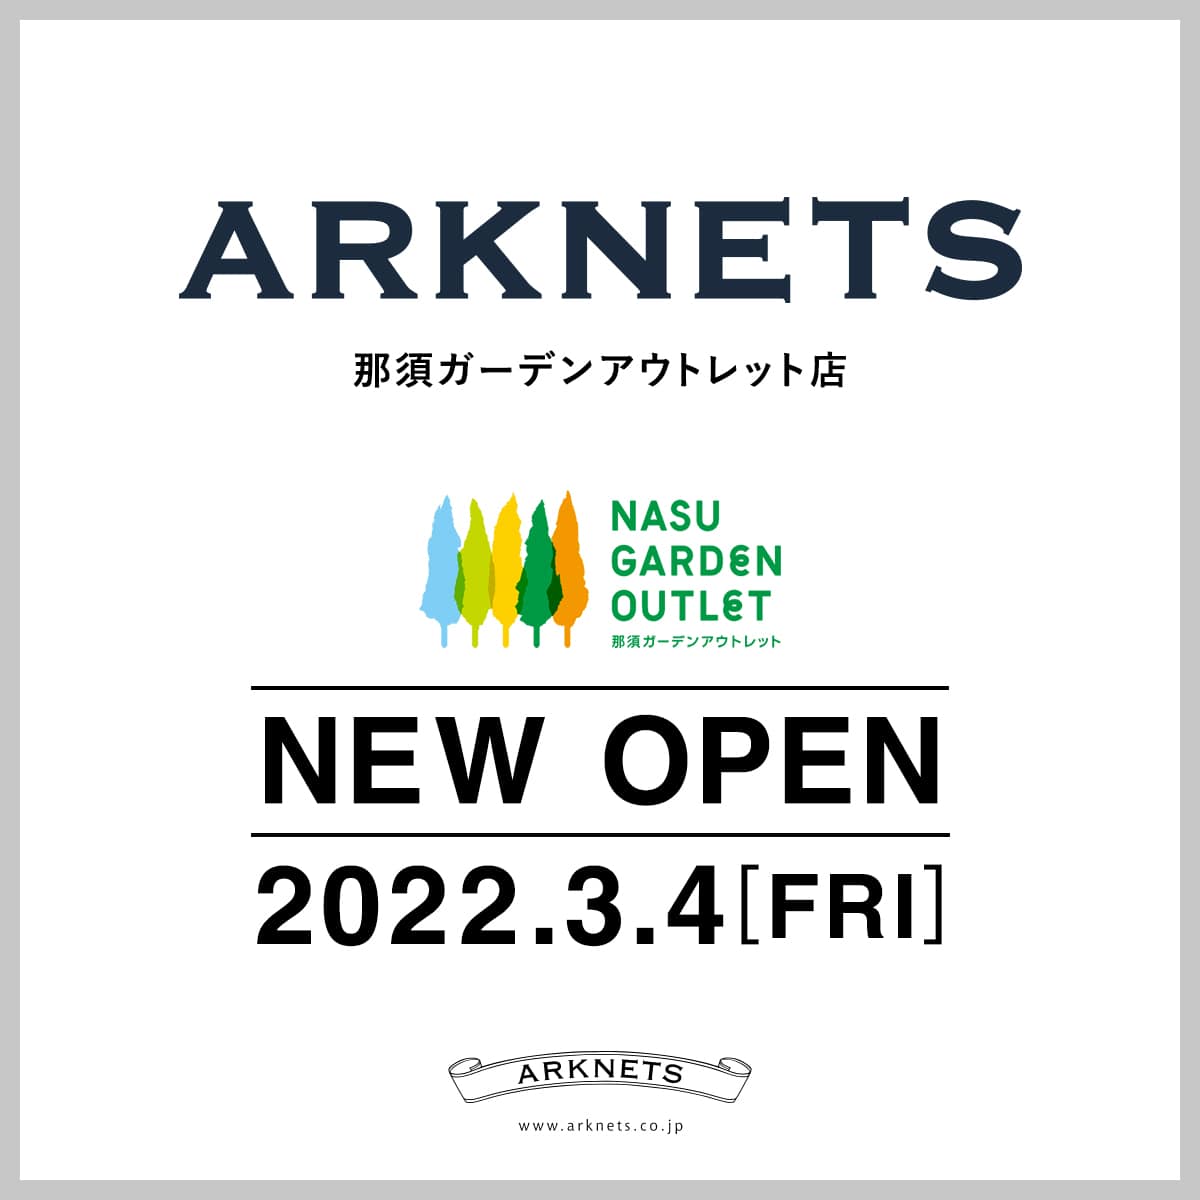 ARKNETS那須ガーデンアウトレット店NEW OPENのお知らせ